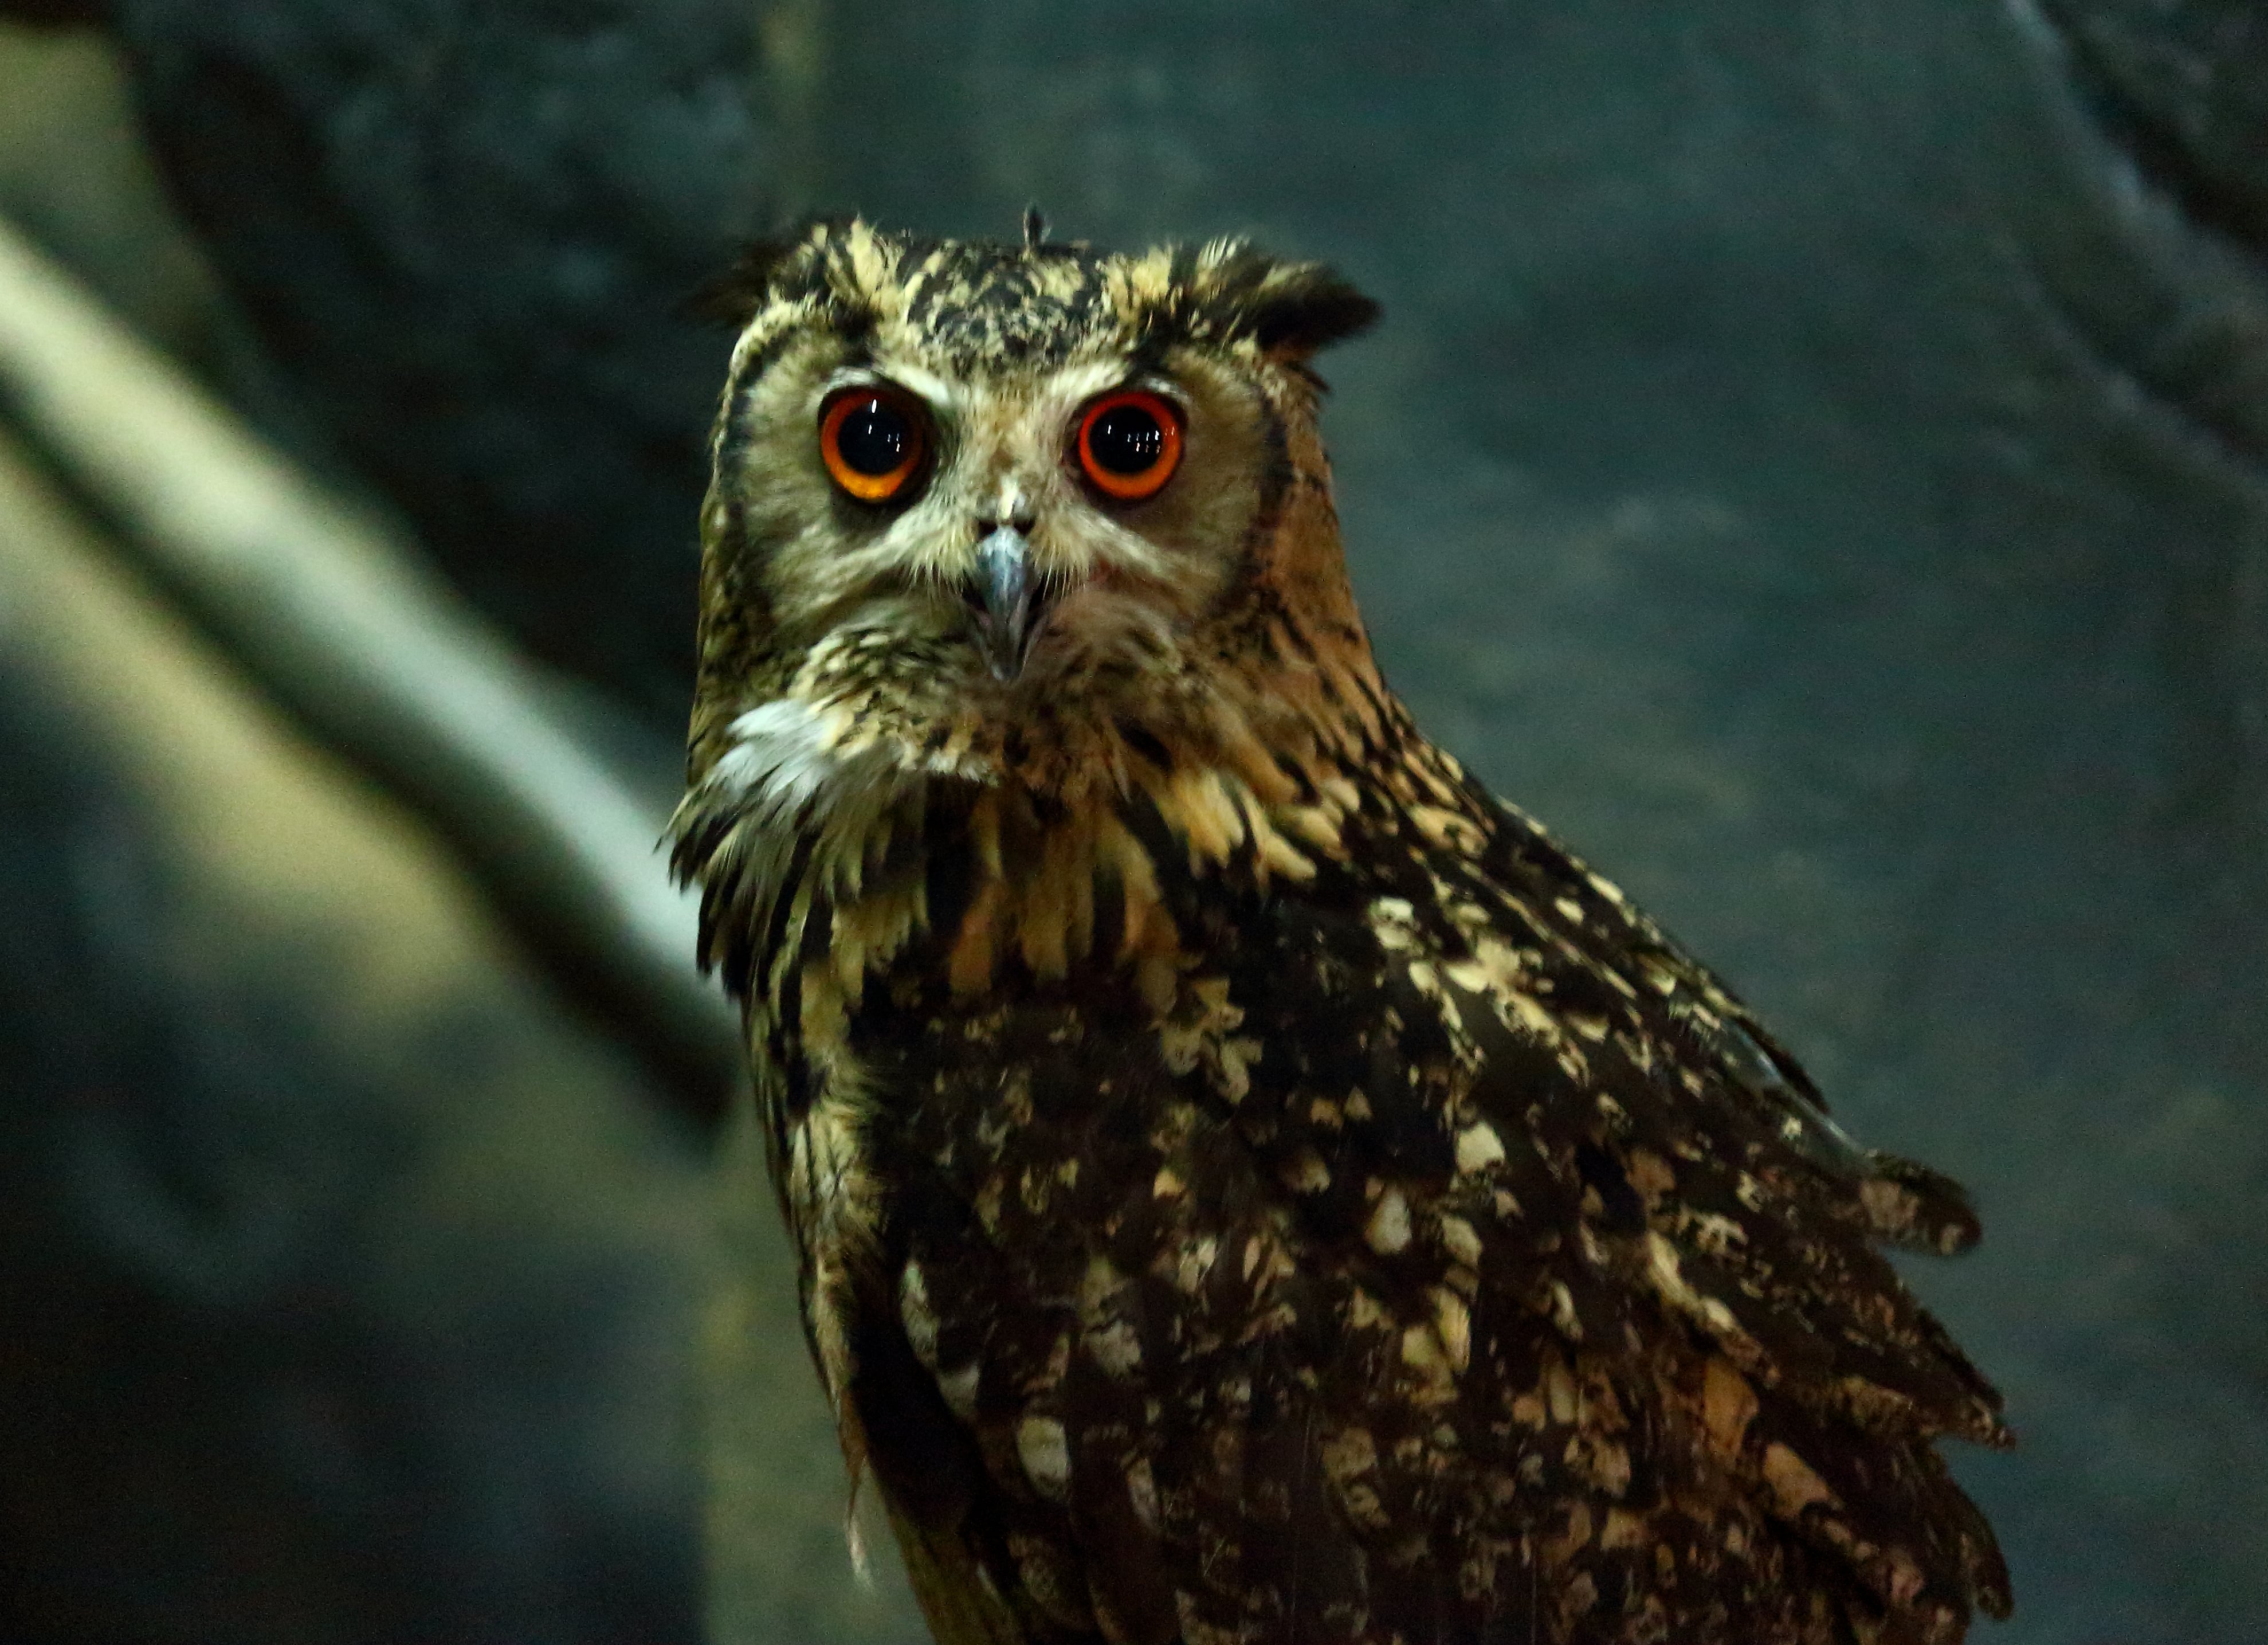 The Indian Eagle Owl